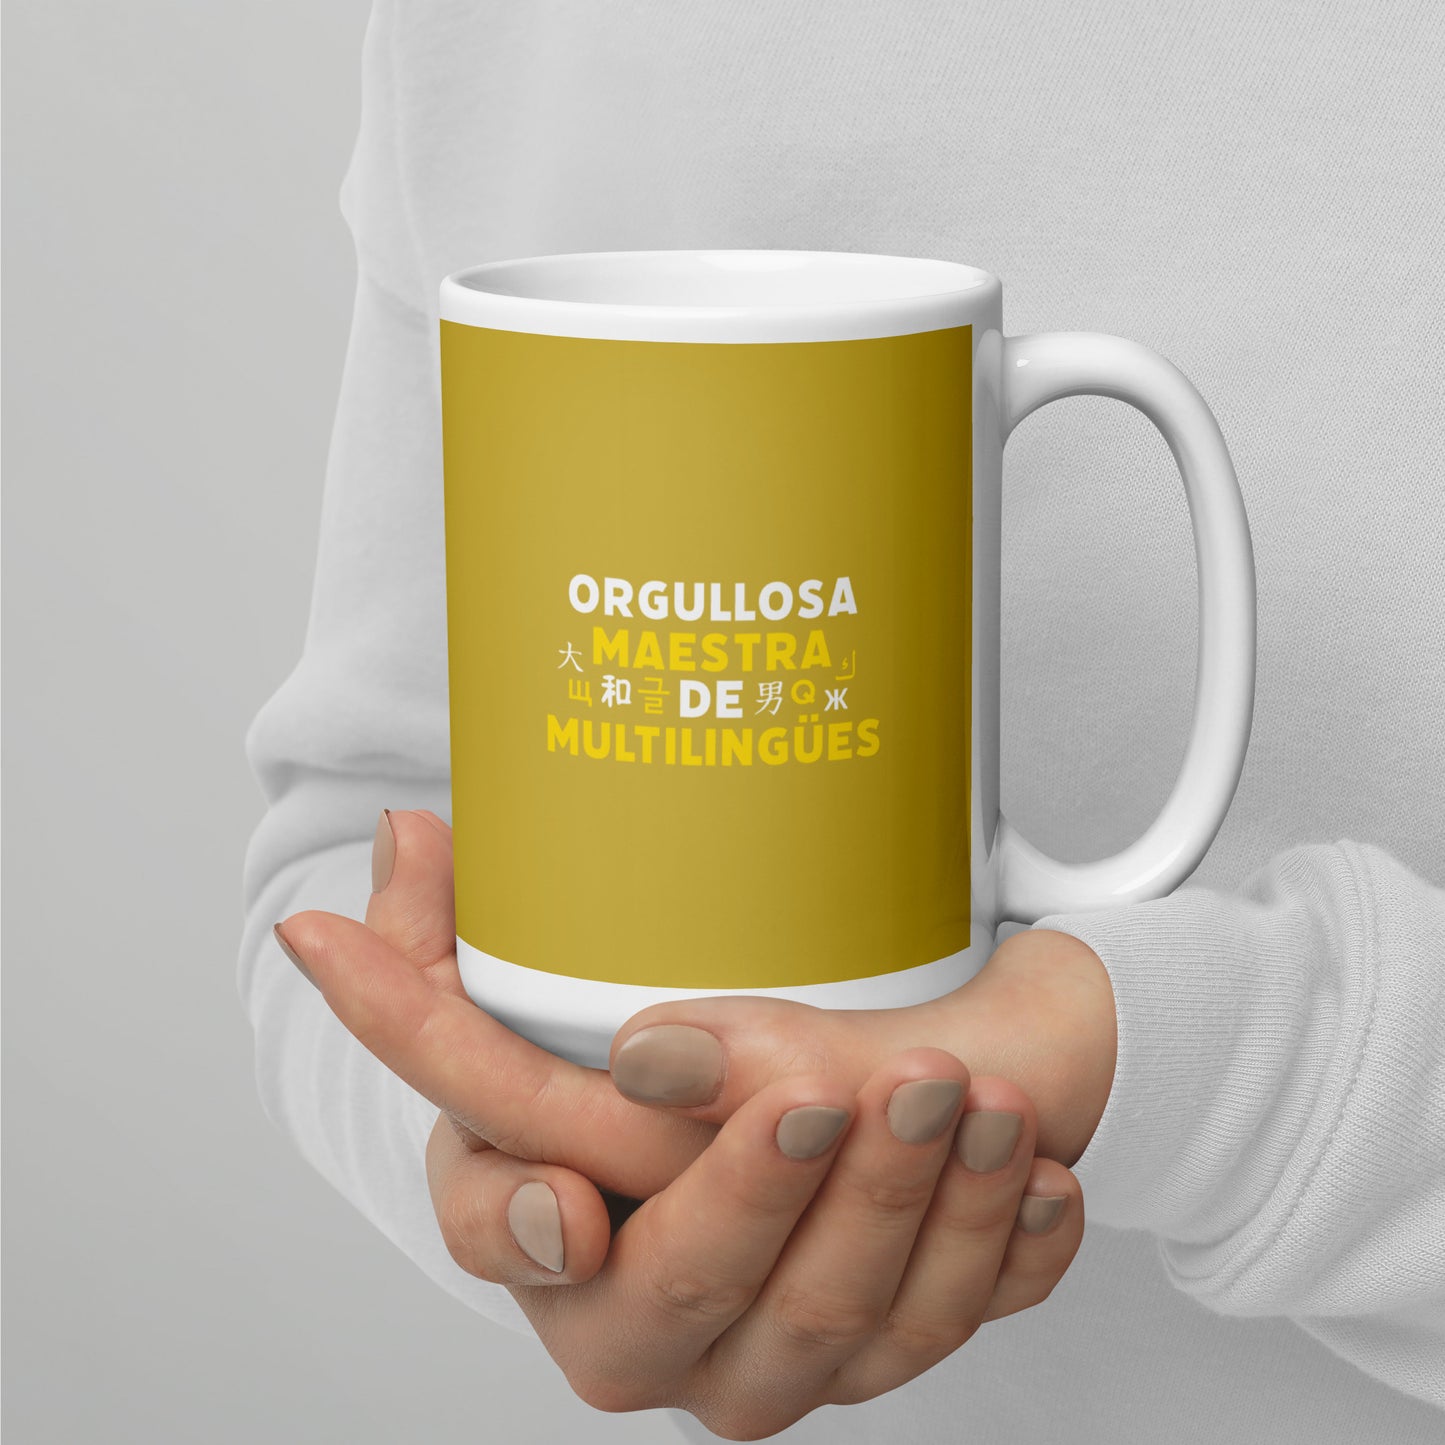 Multilingual teacher White glossy mug (Spanish).